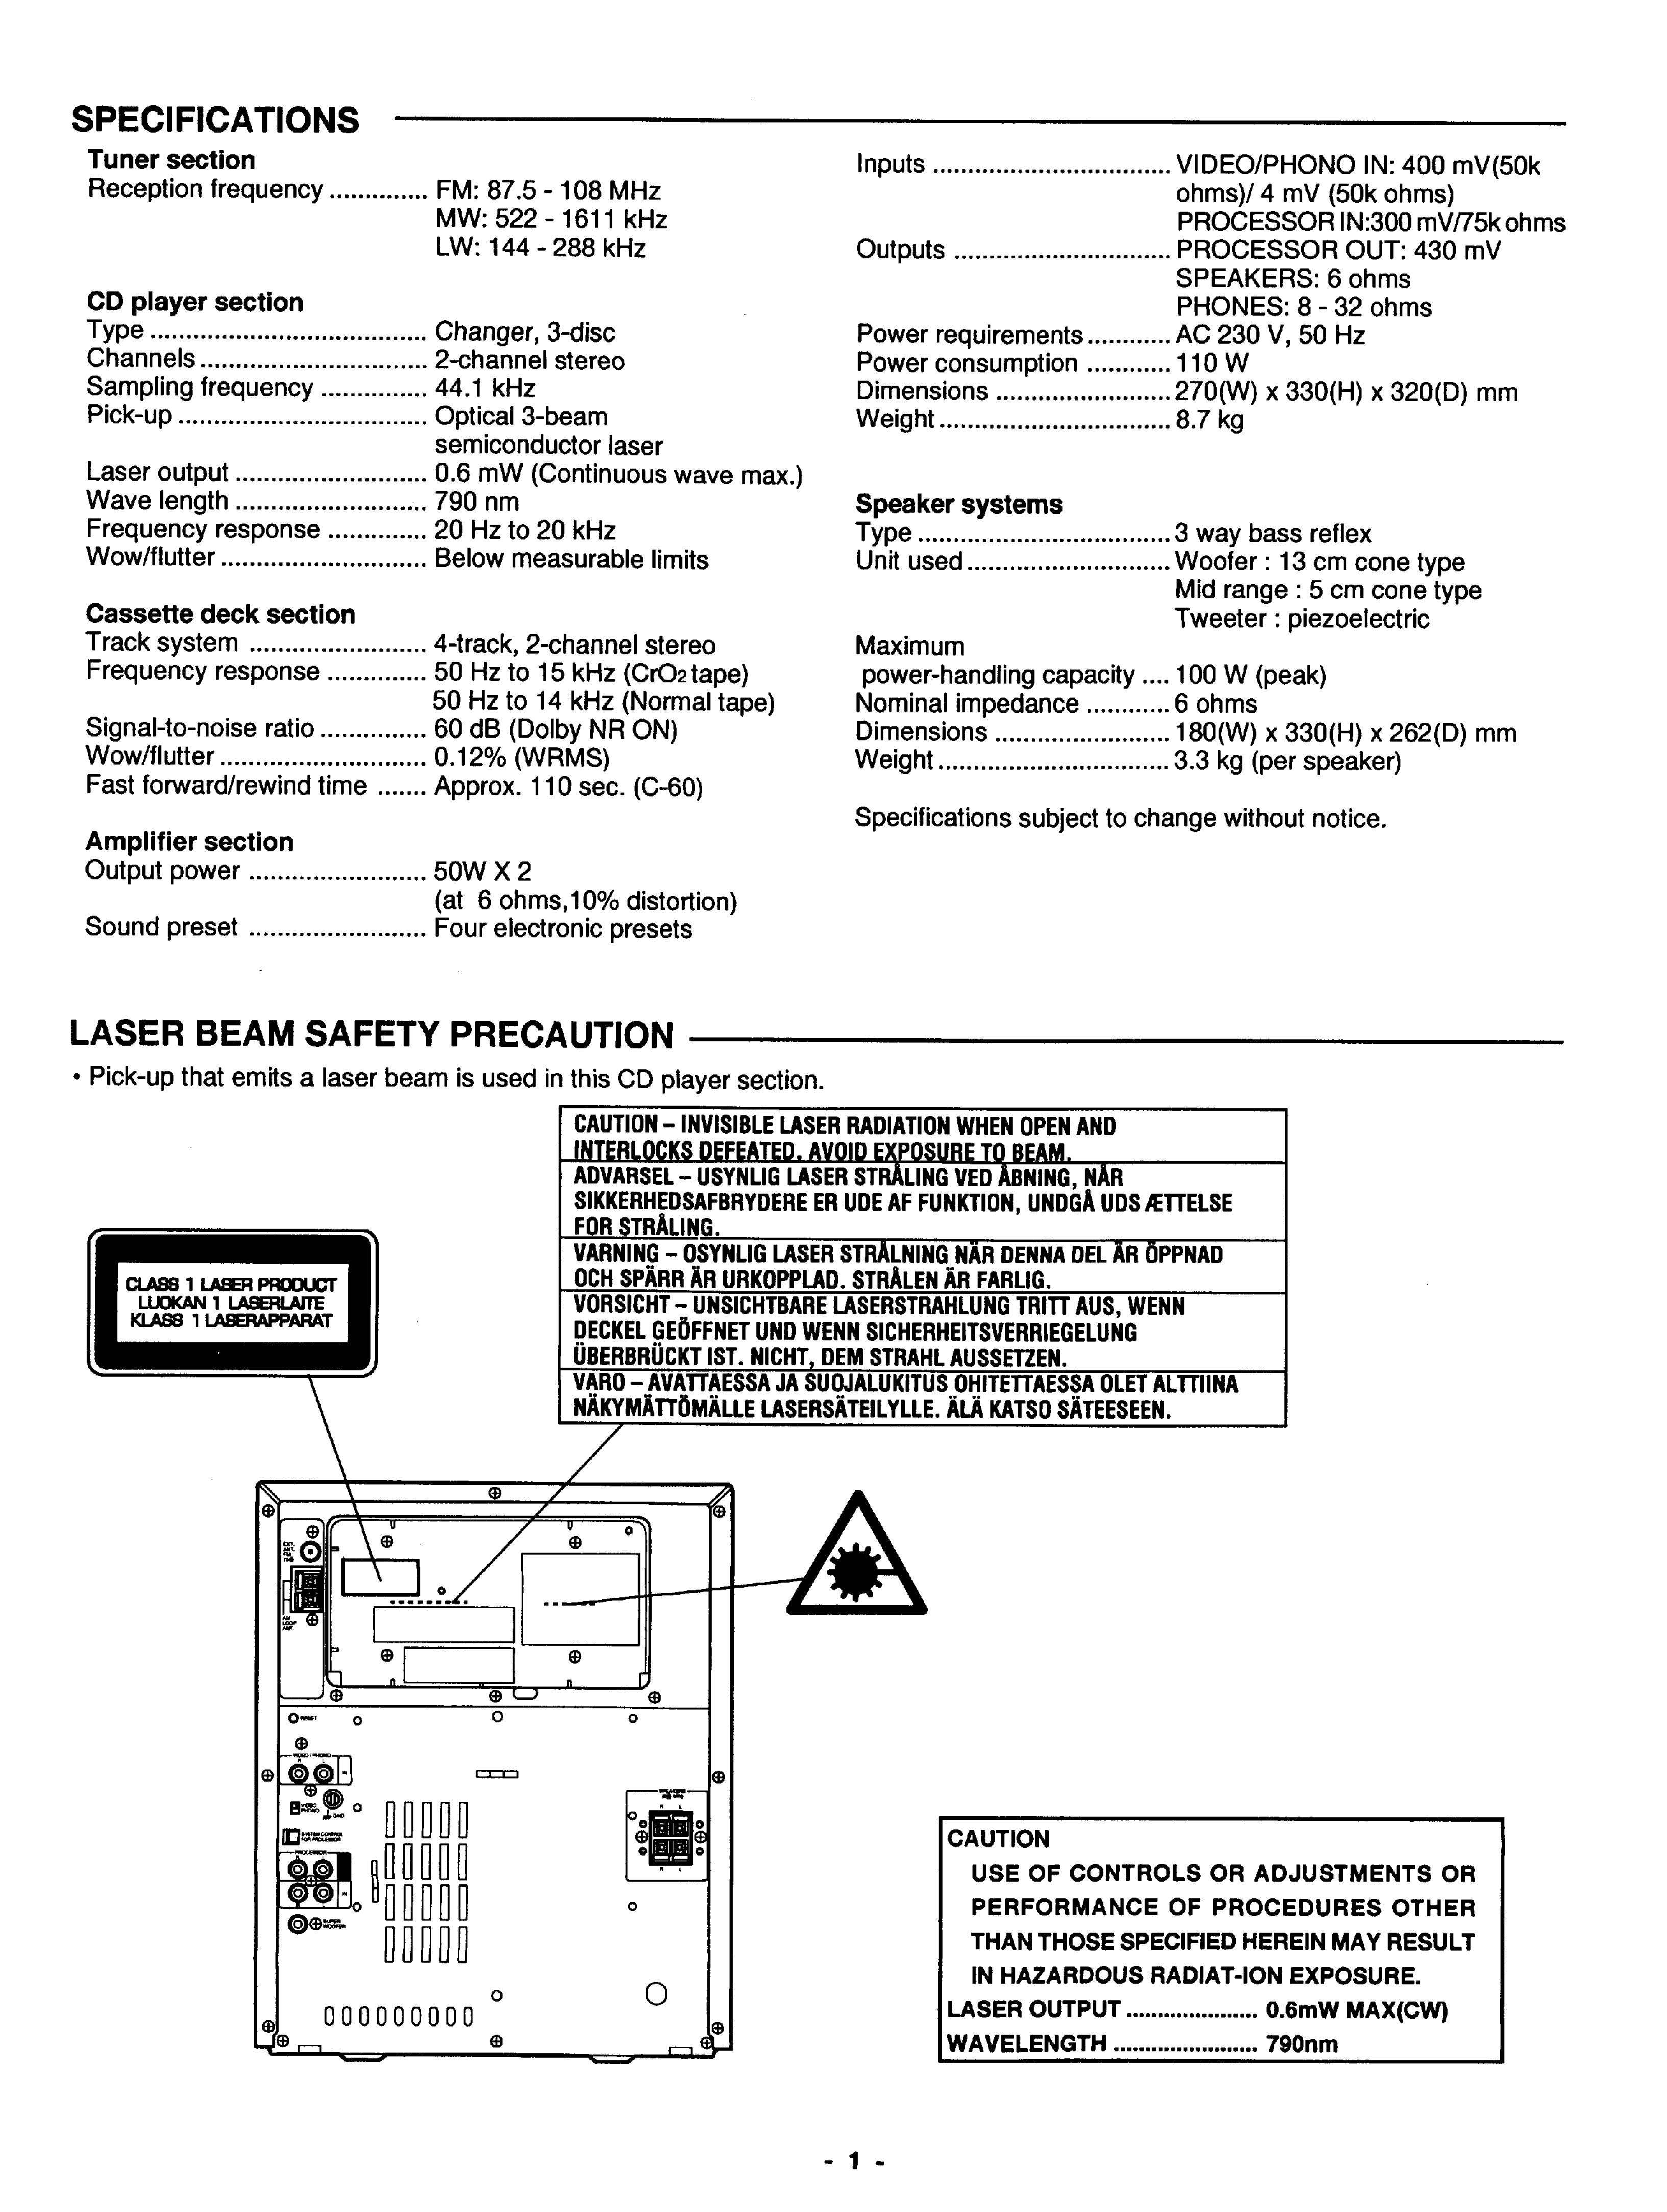 SANYO DCF300 - Service Manual Immediate Download